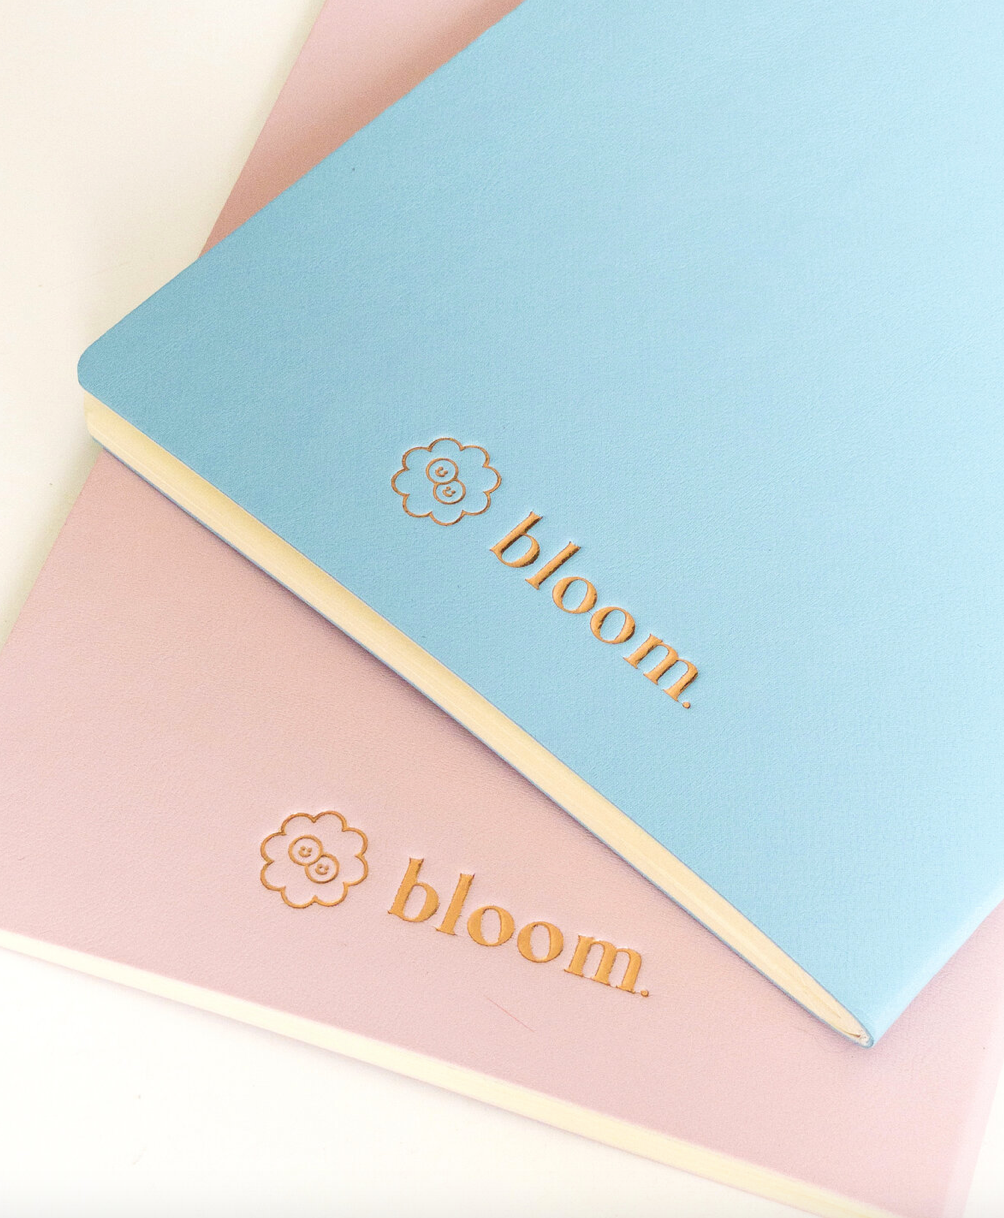 Bloom agenda semanal